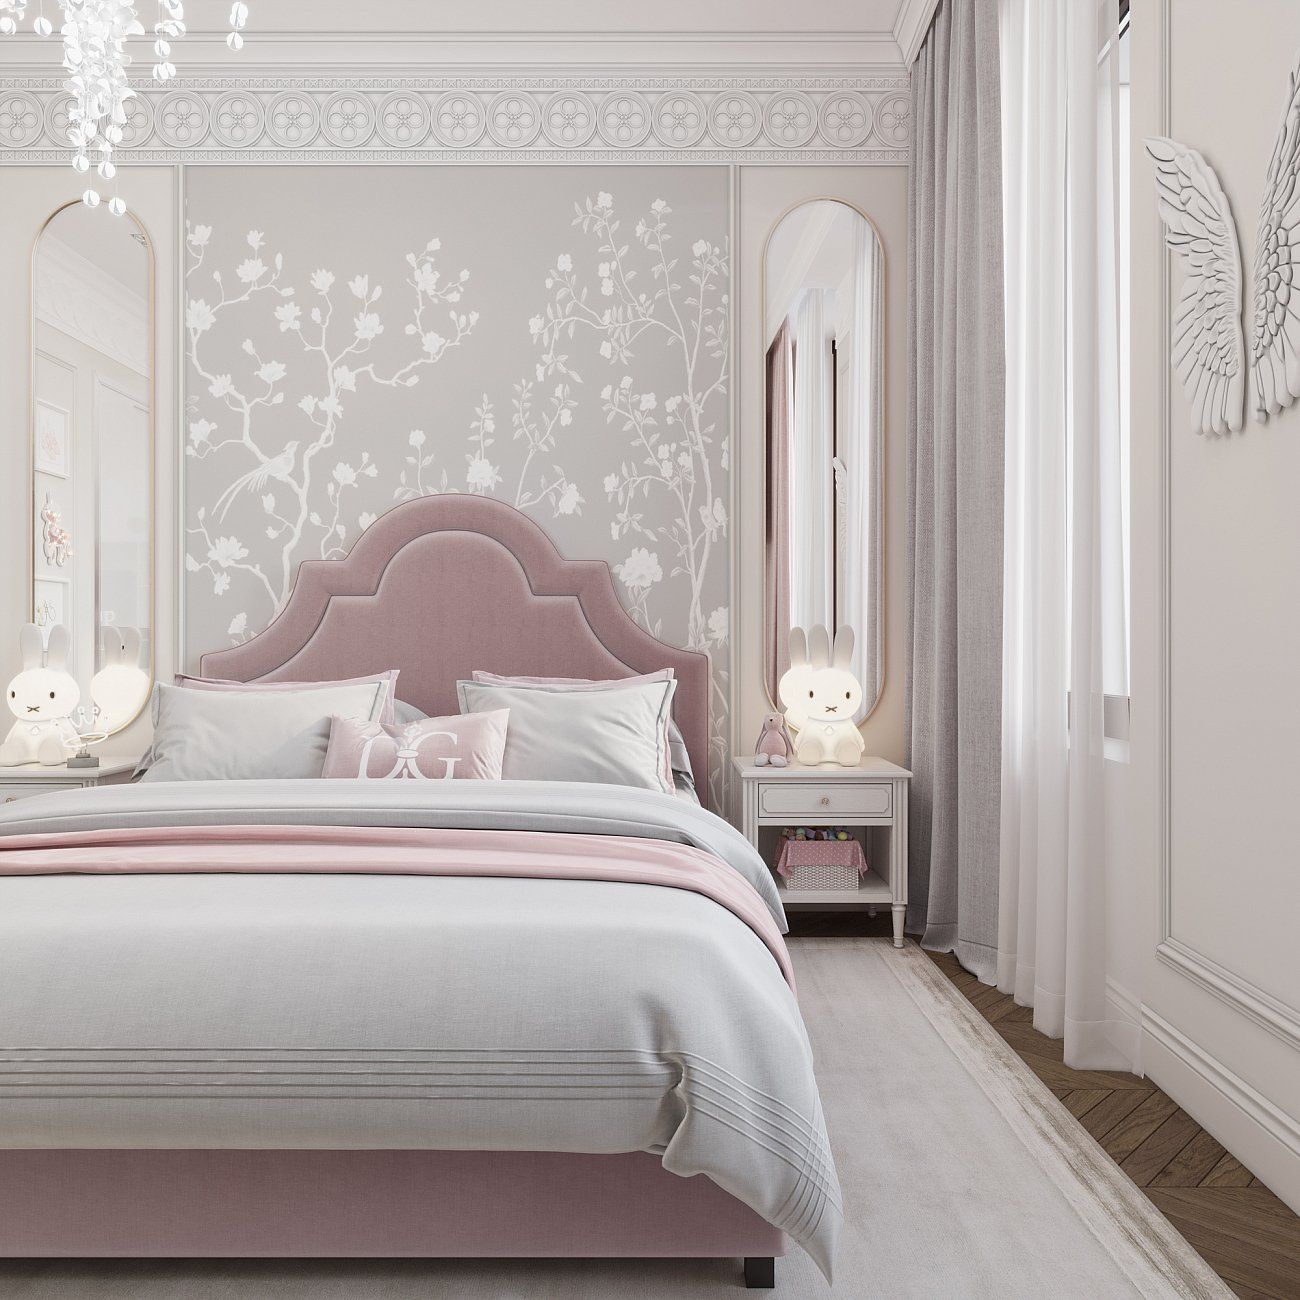 Кровать двуспальная 160х200 см розовая Kennedy